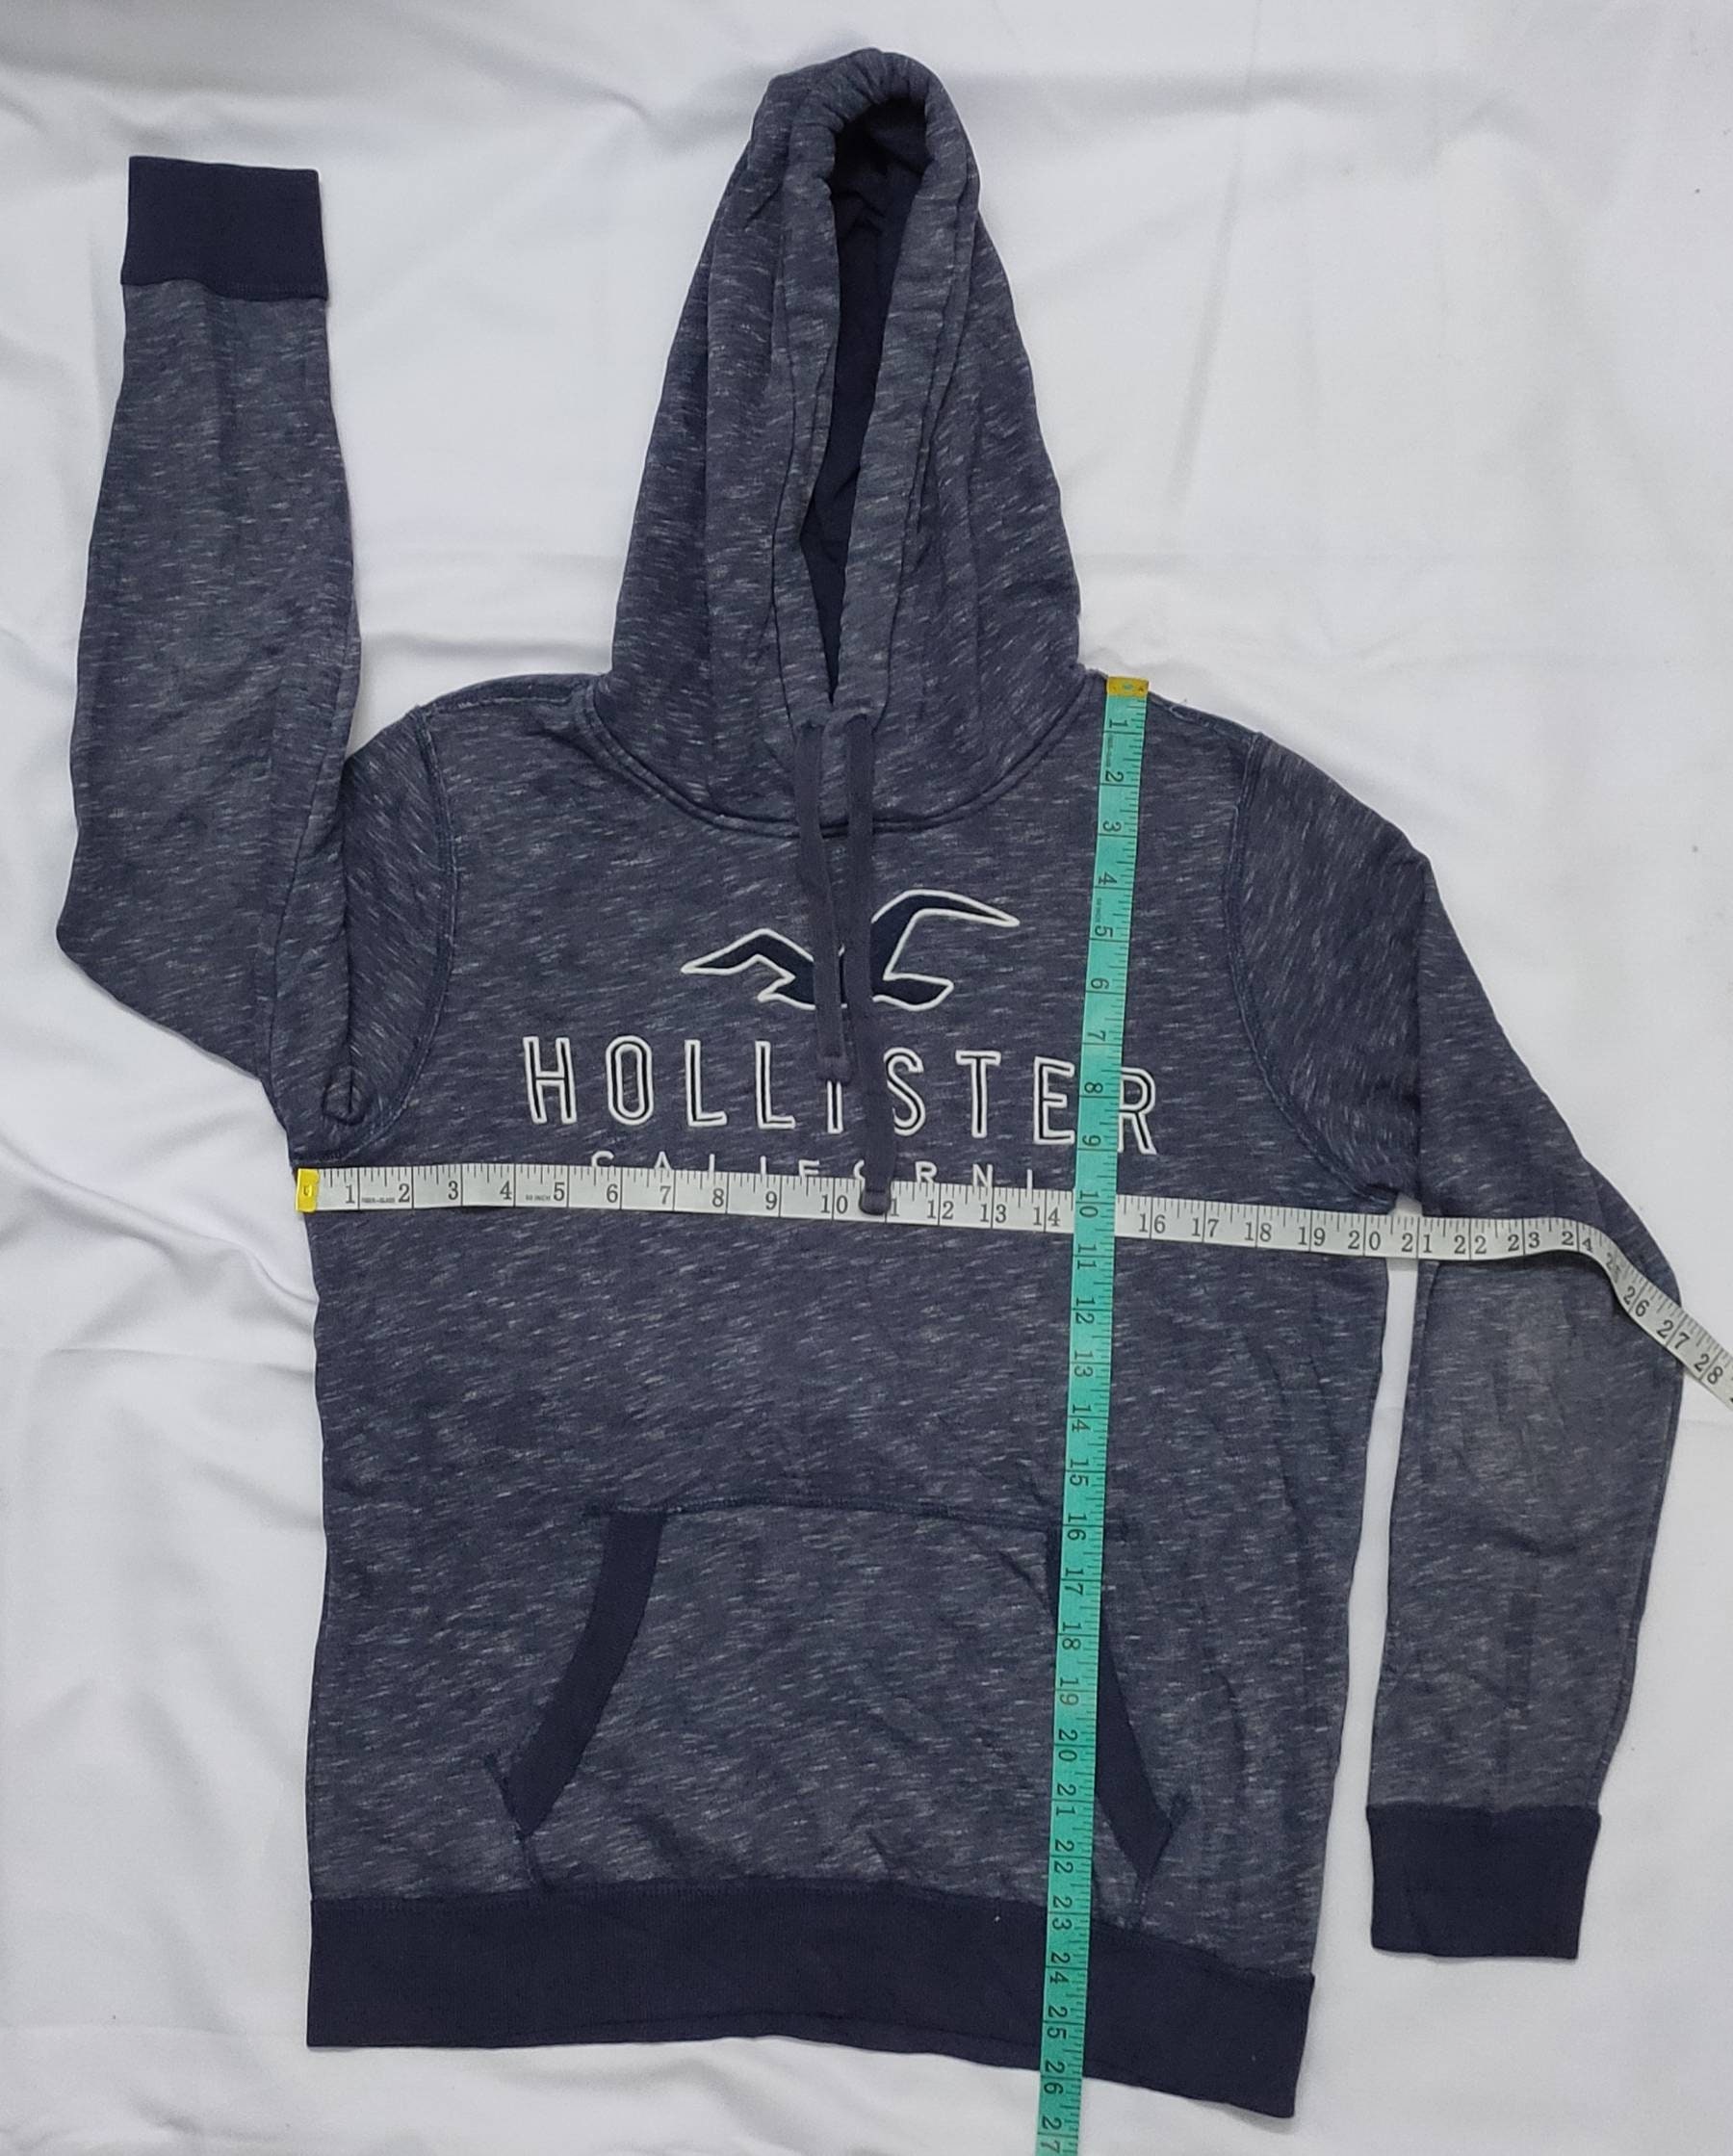 Hollister California sudadera con capucha logotipo bordado talla S